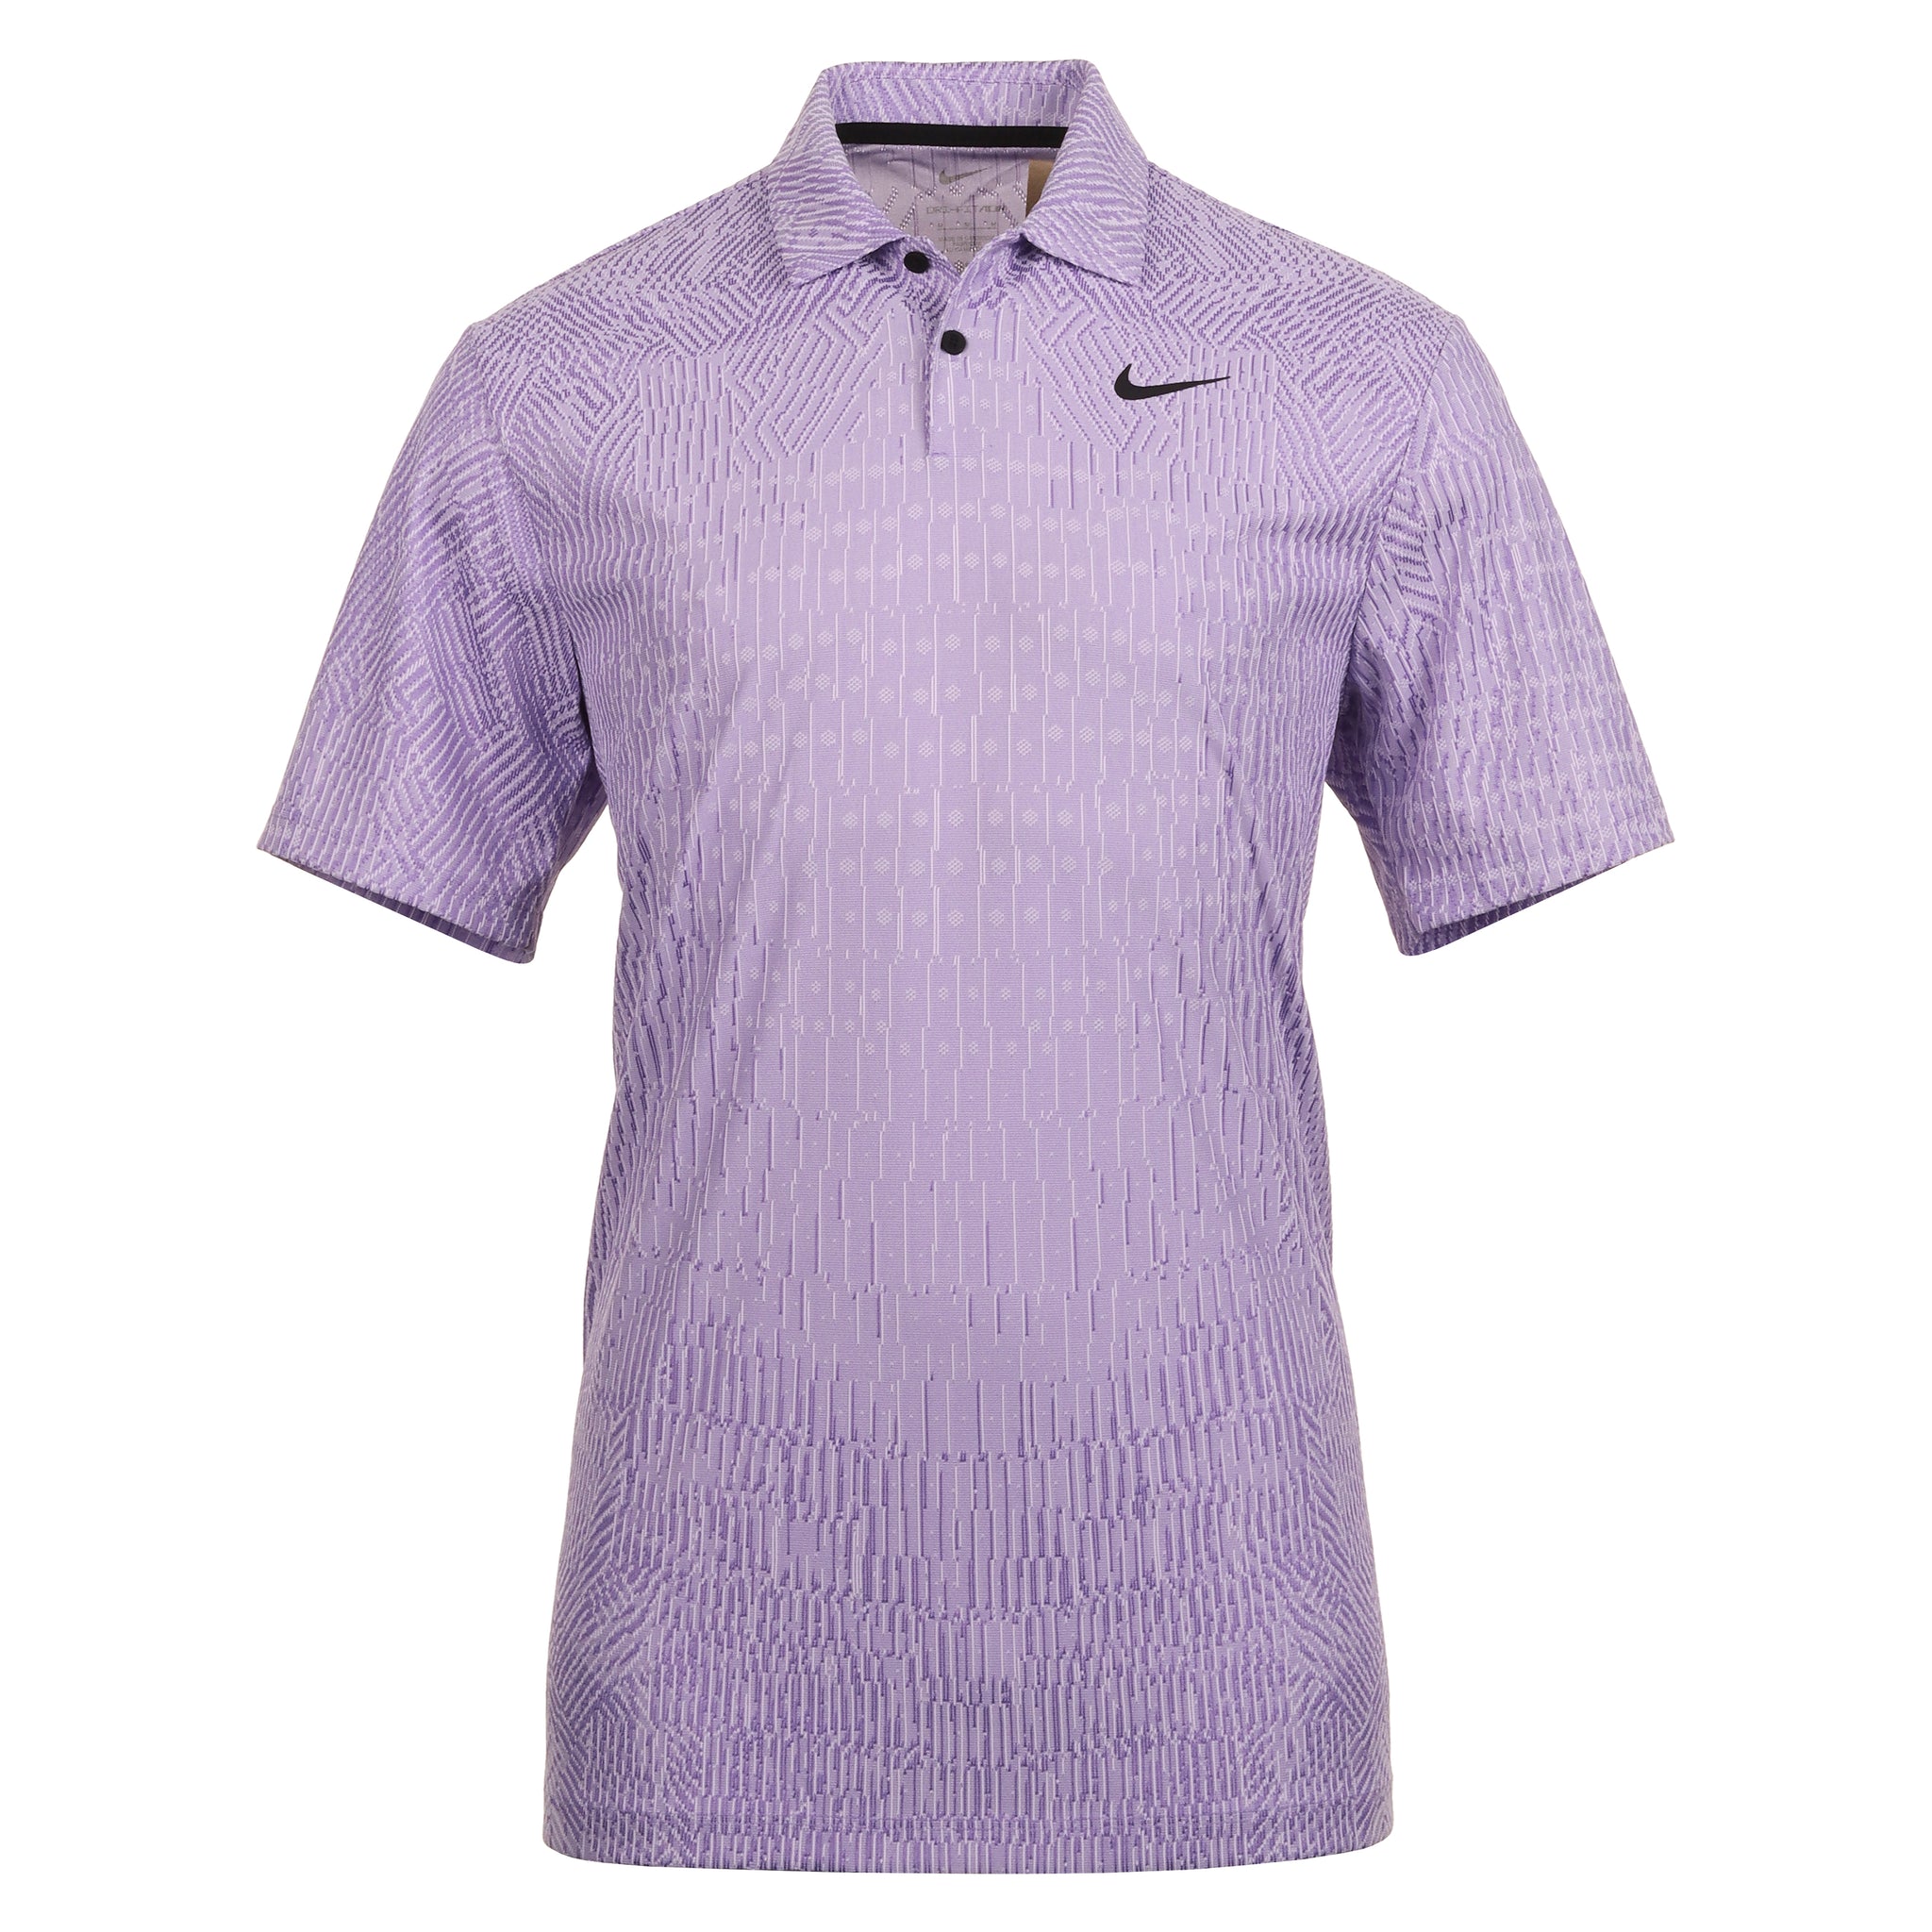 nike-golf-dri-fit-adv-tour-shirt-fd5731-512-lilac-bloom-space-purple